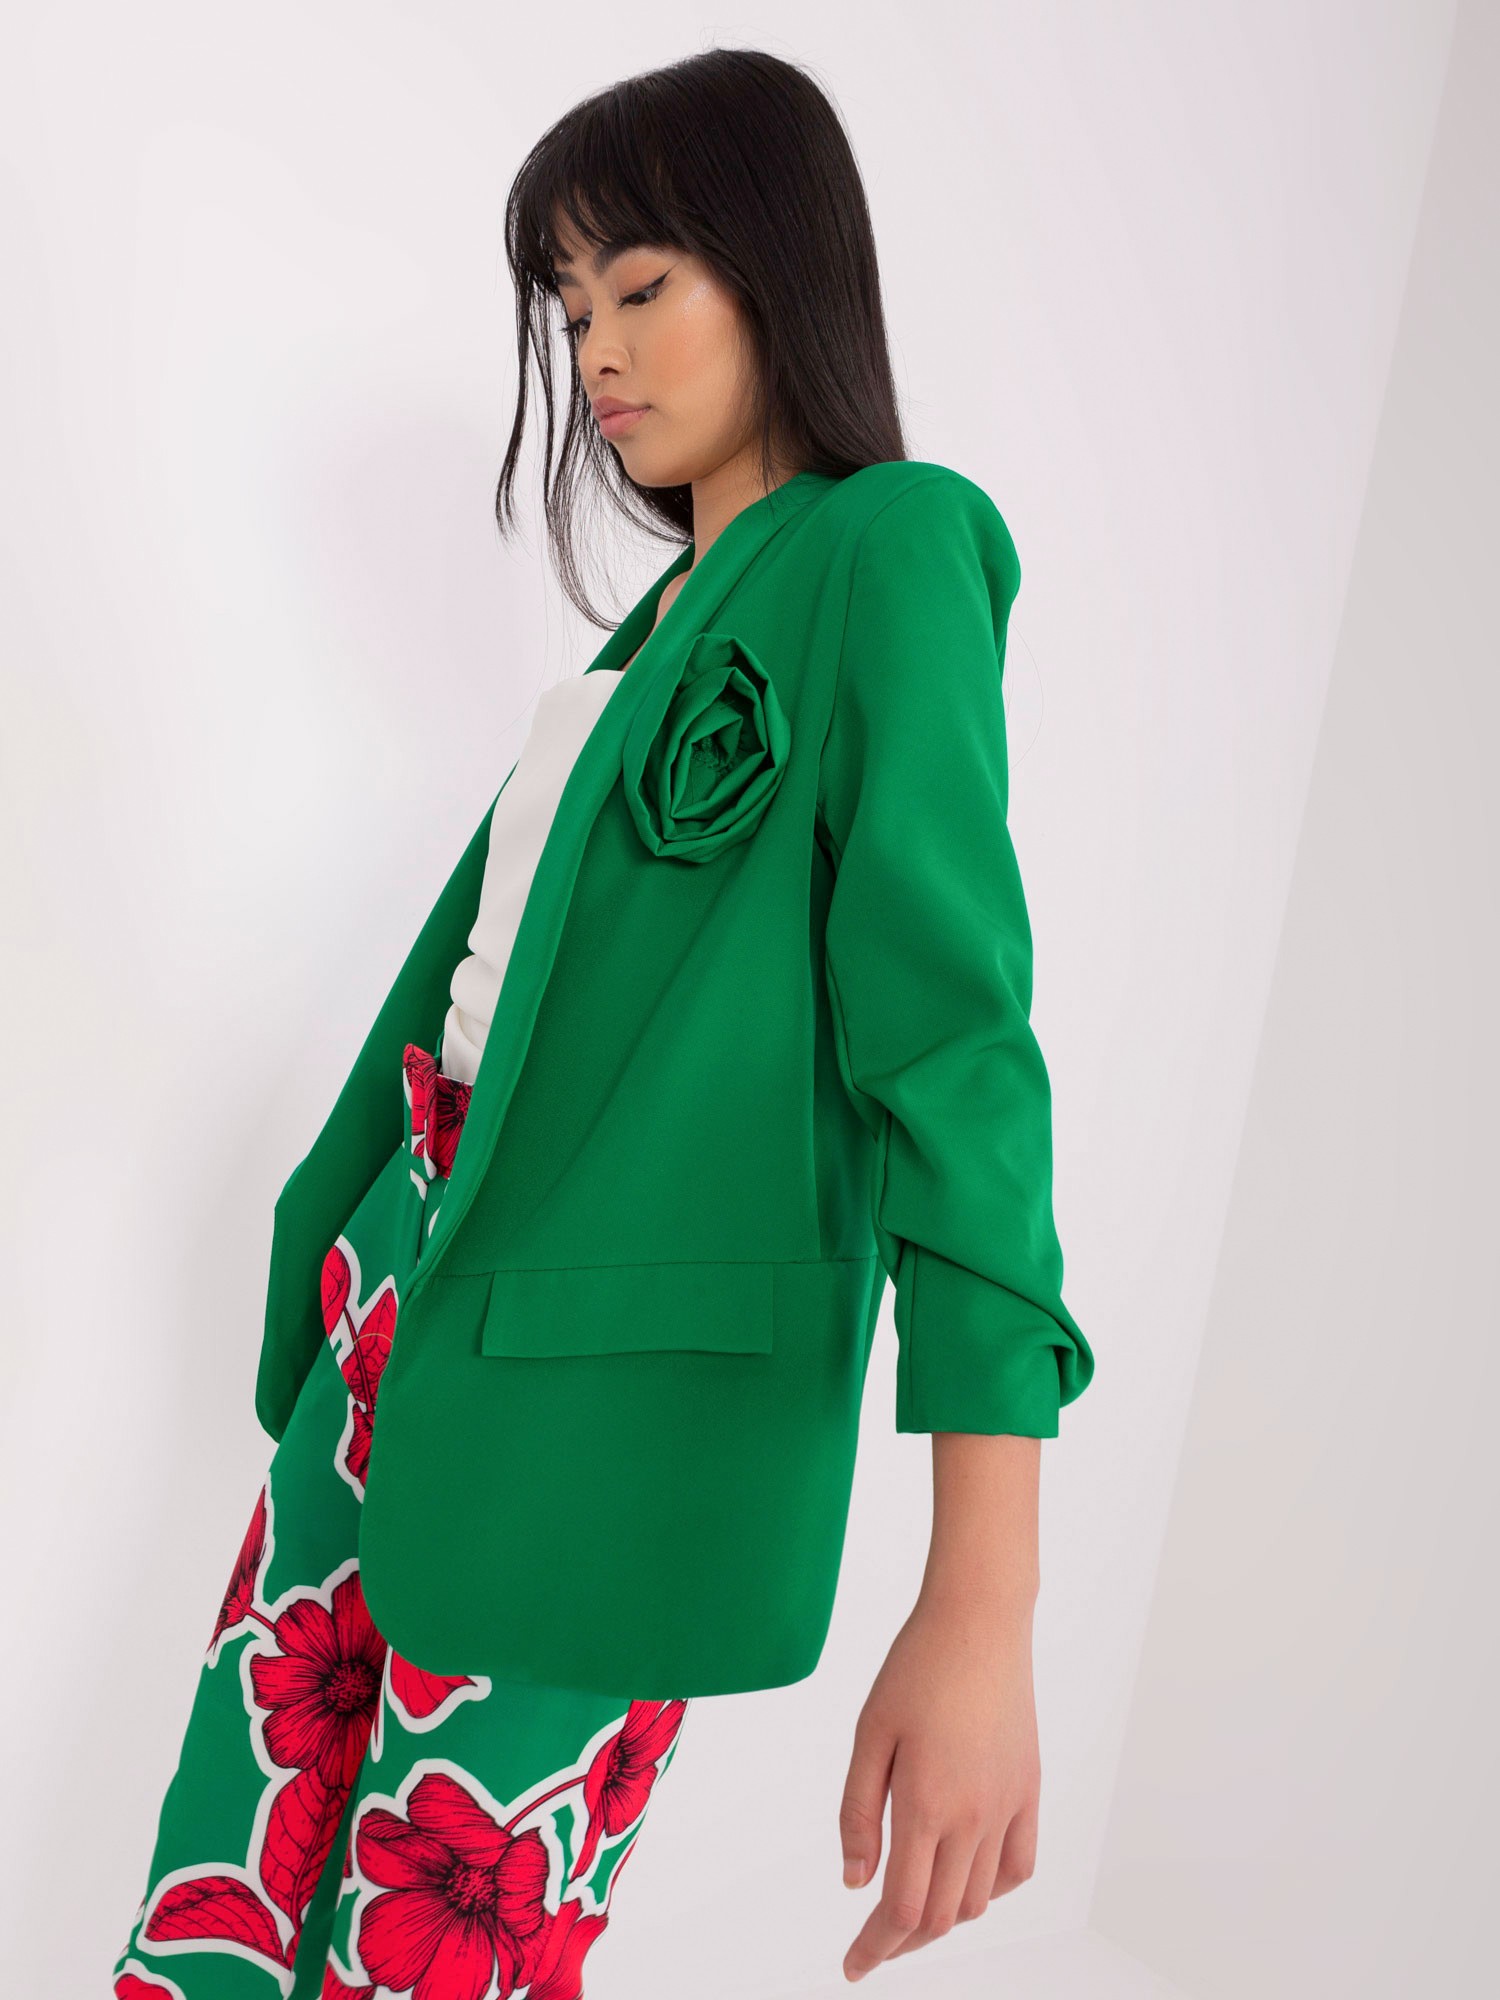 Green elegant jacket with flower